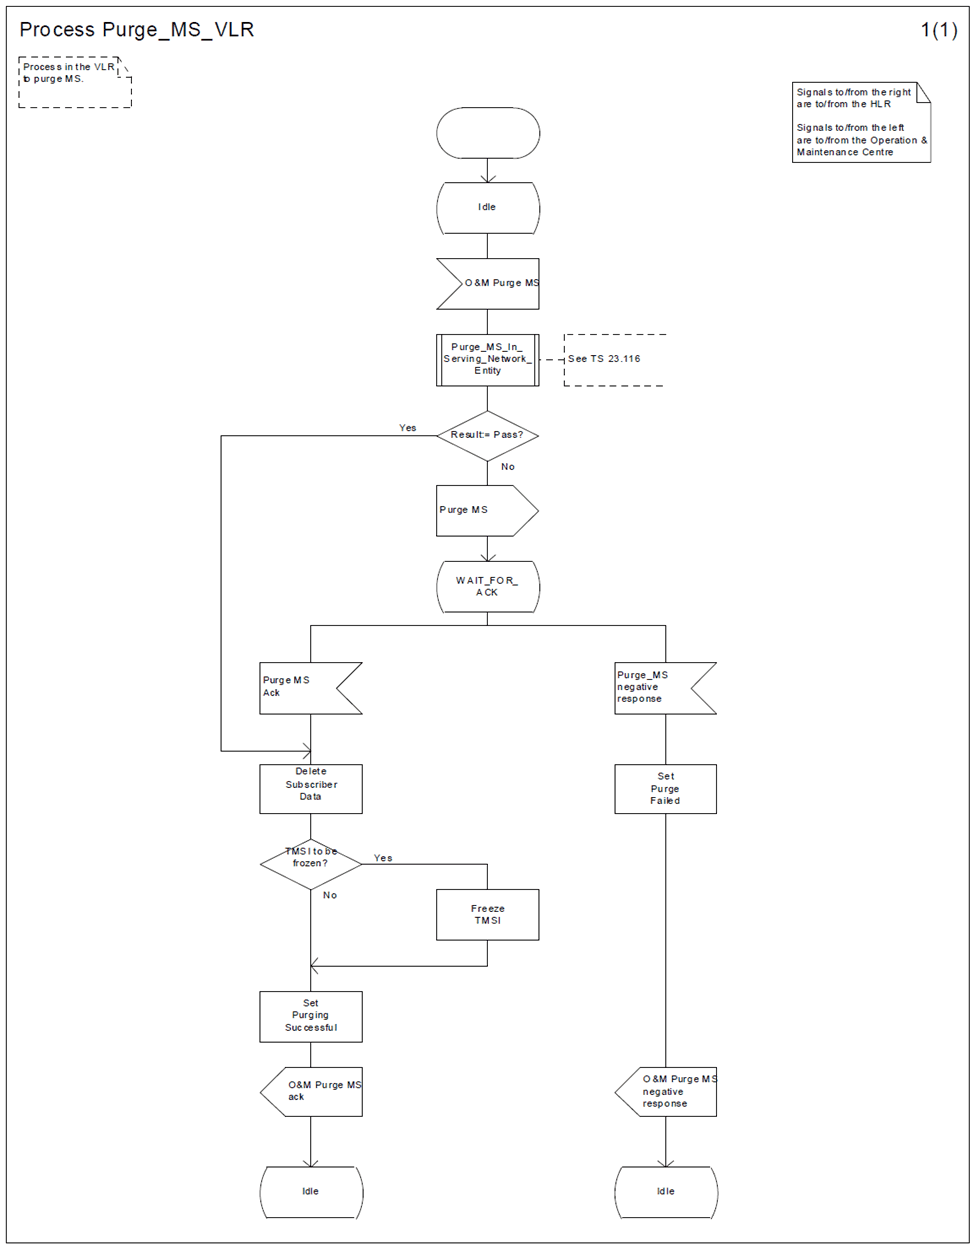 Copy of original 3GPP image for 3GPP TS 23.012, Fig. 4.4.1.1-1: (Sheet 1 of 1) Procedure Purge_MS_VLR 